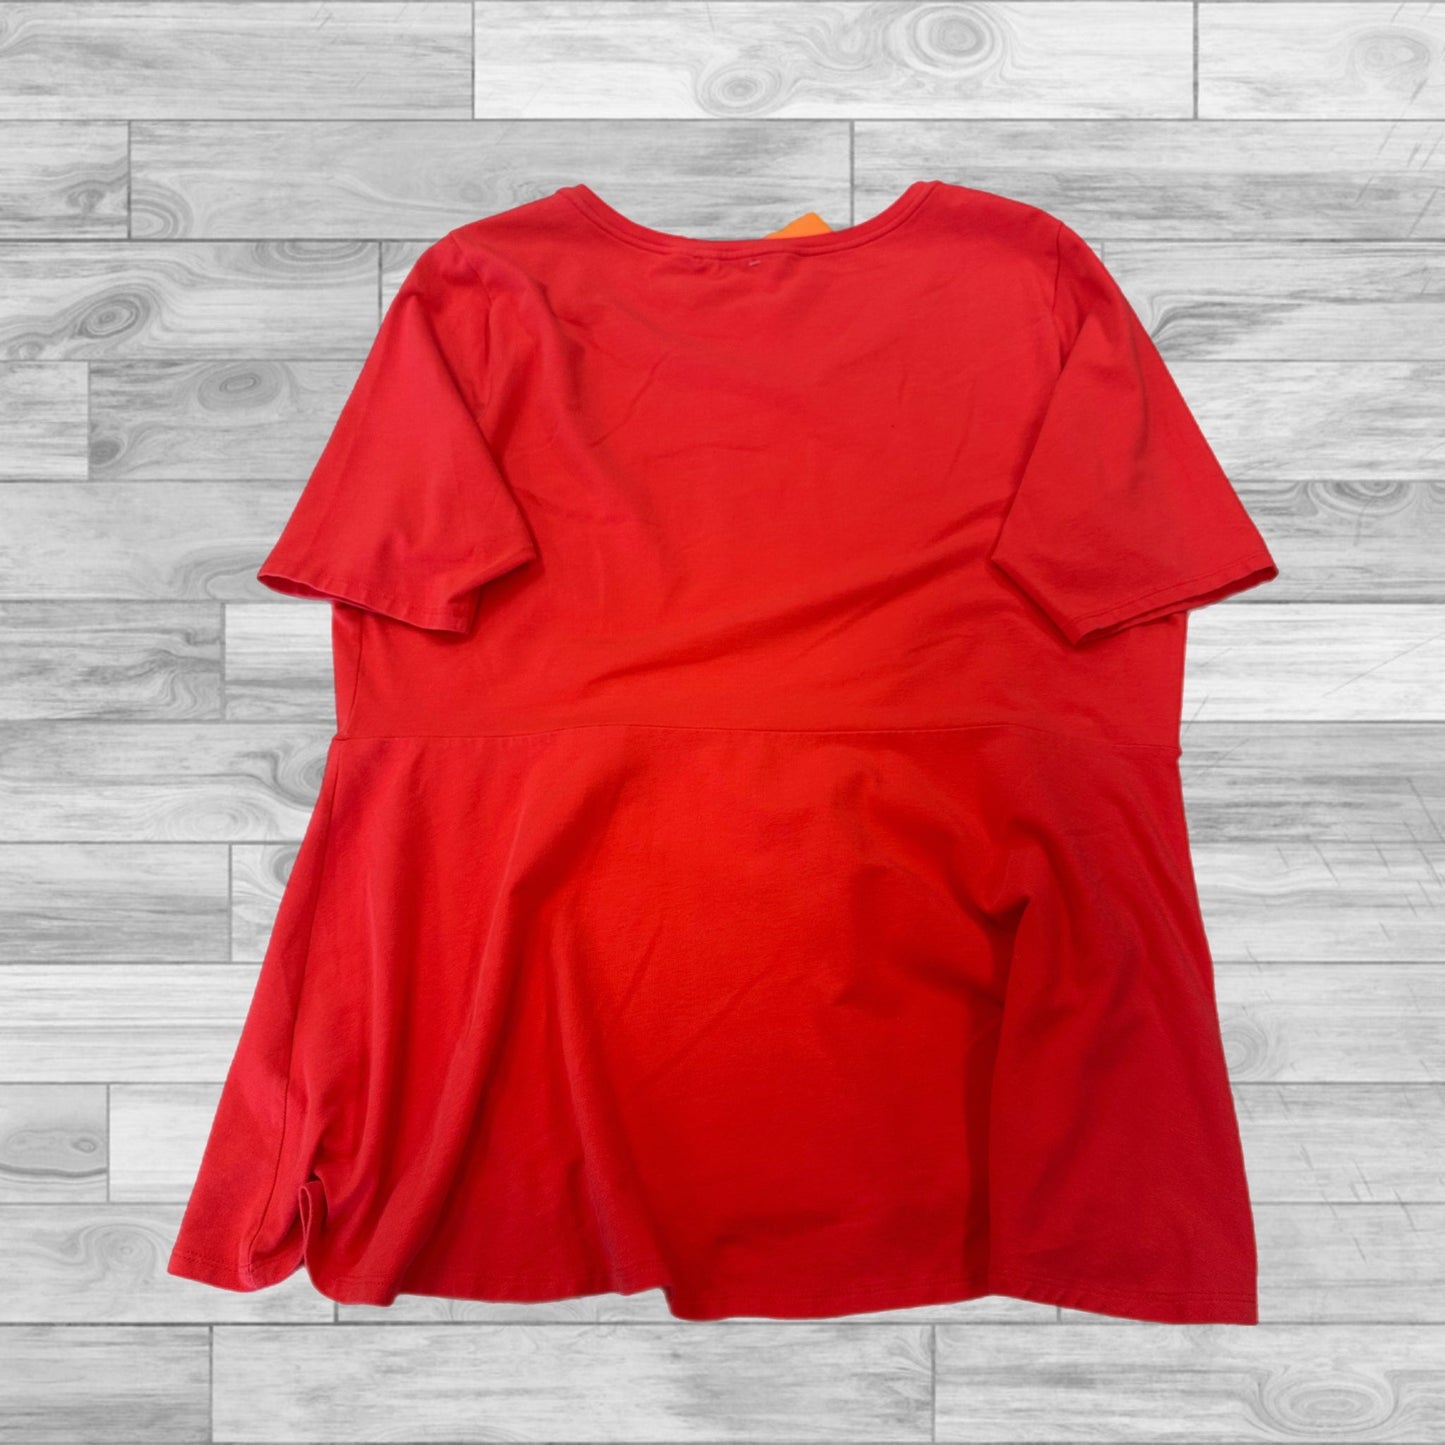 Red Top Short Sleeve Isaac Mizrahi Live Qvc, Size L